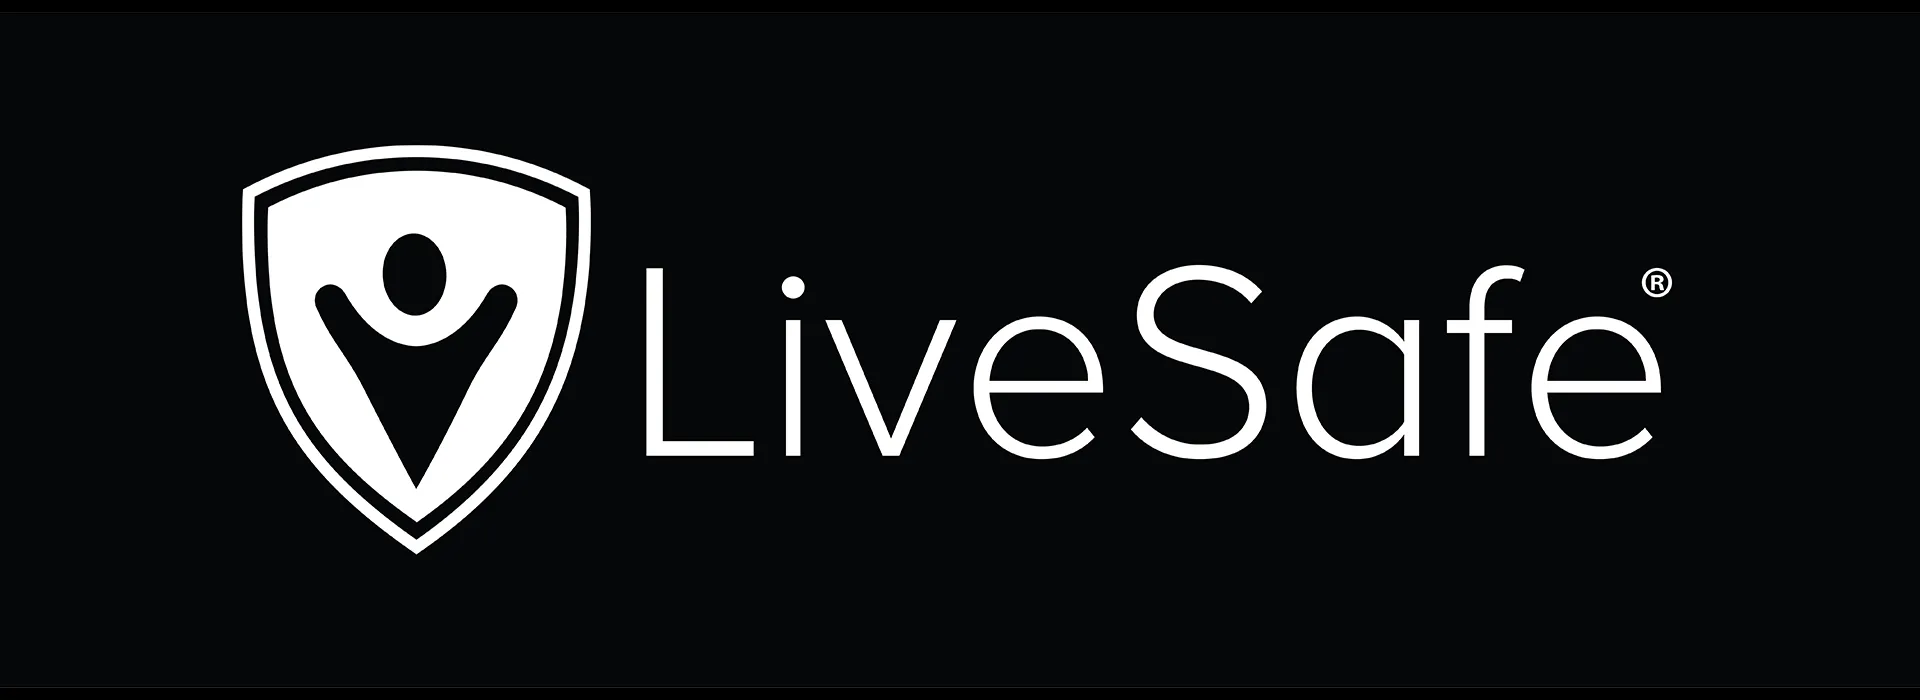 LiveSafe mobile safety app